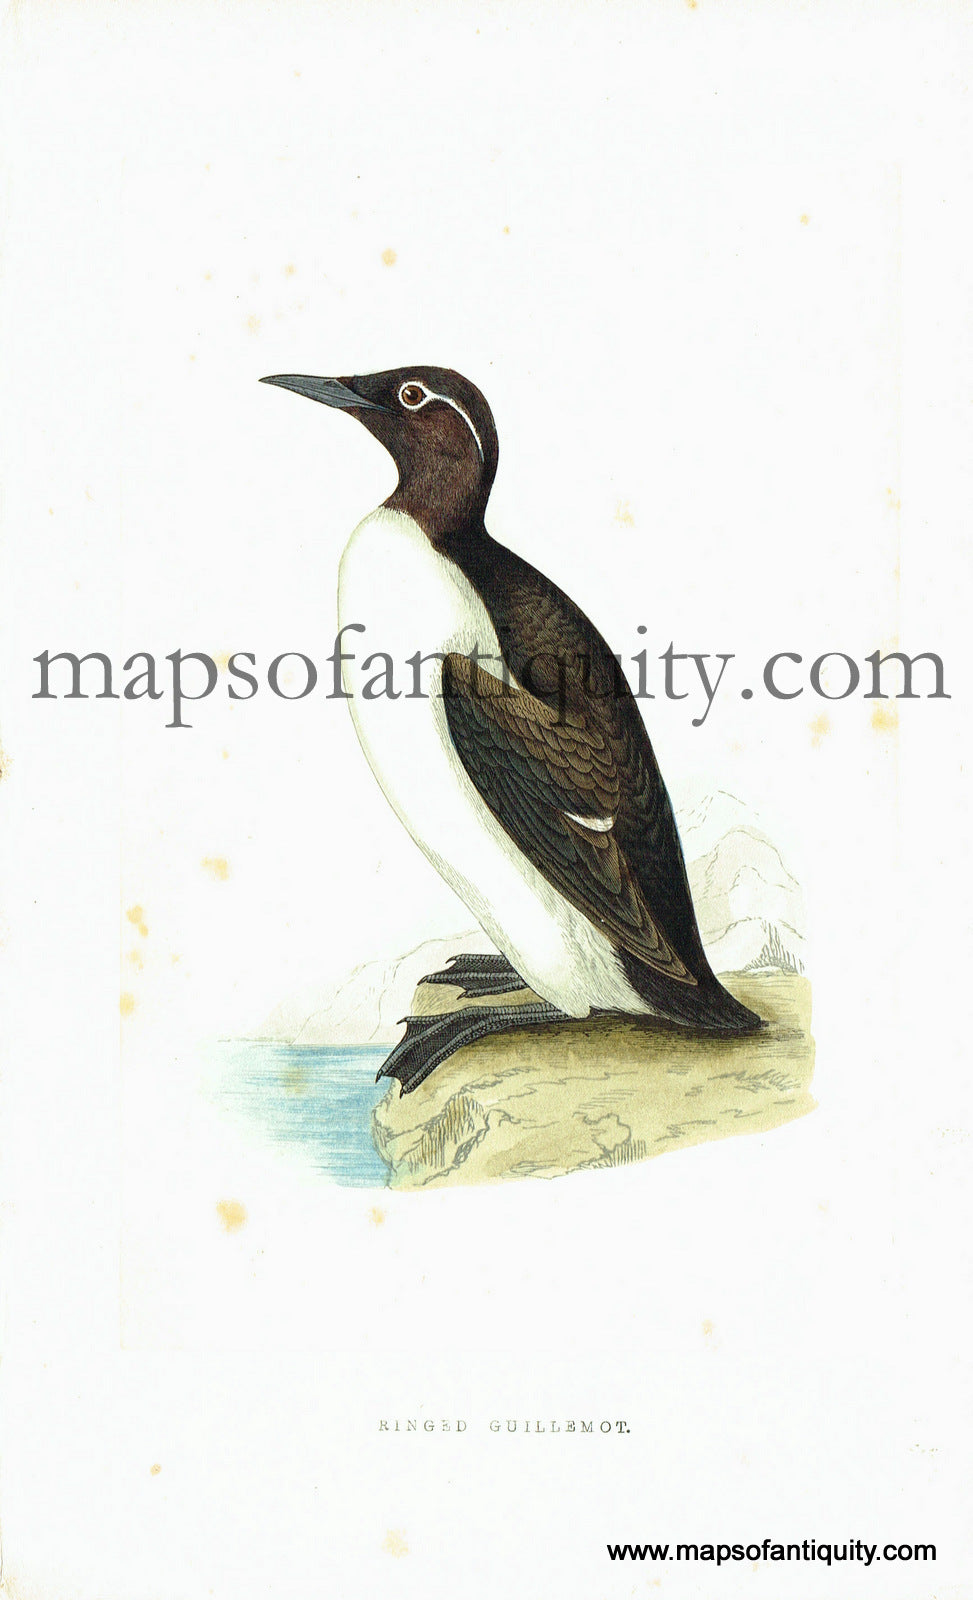 Antique-Hand-Colored-Engraved-Illustration-Ringed-Guillemot-Antique-Prints-Natural-History-Birds-c.-1860-Morris-Maps-Of-Antiquity